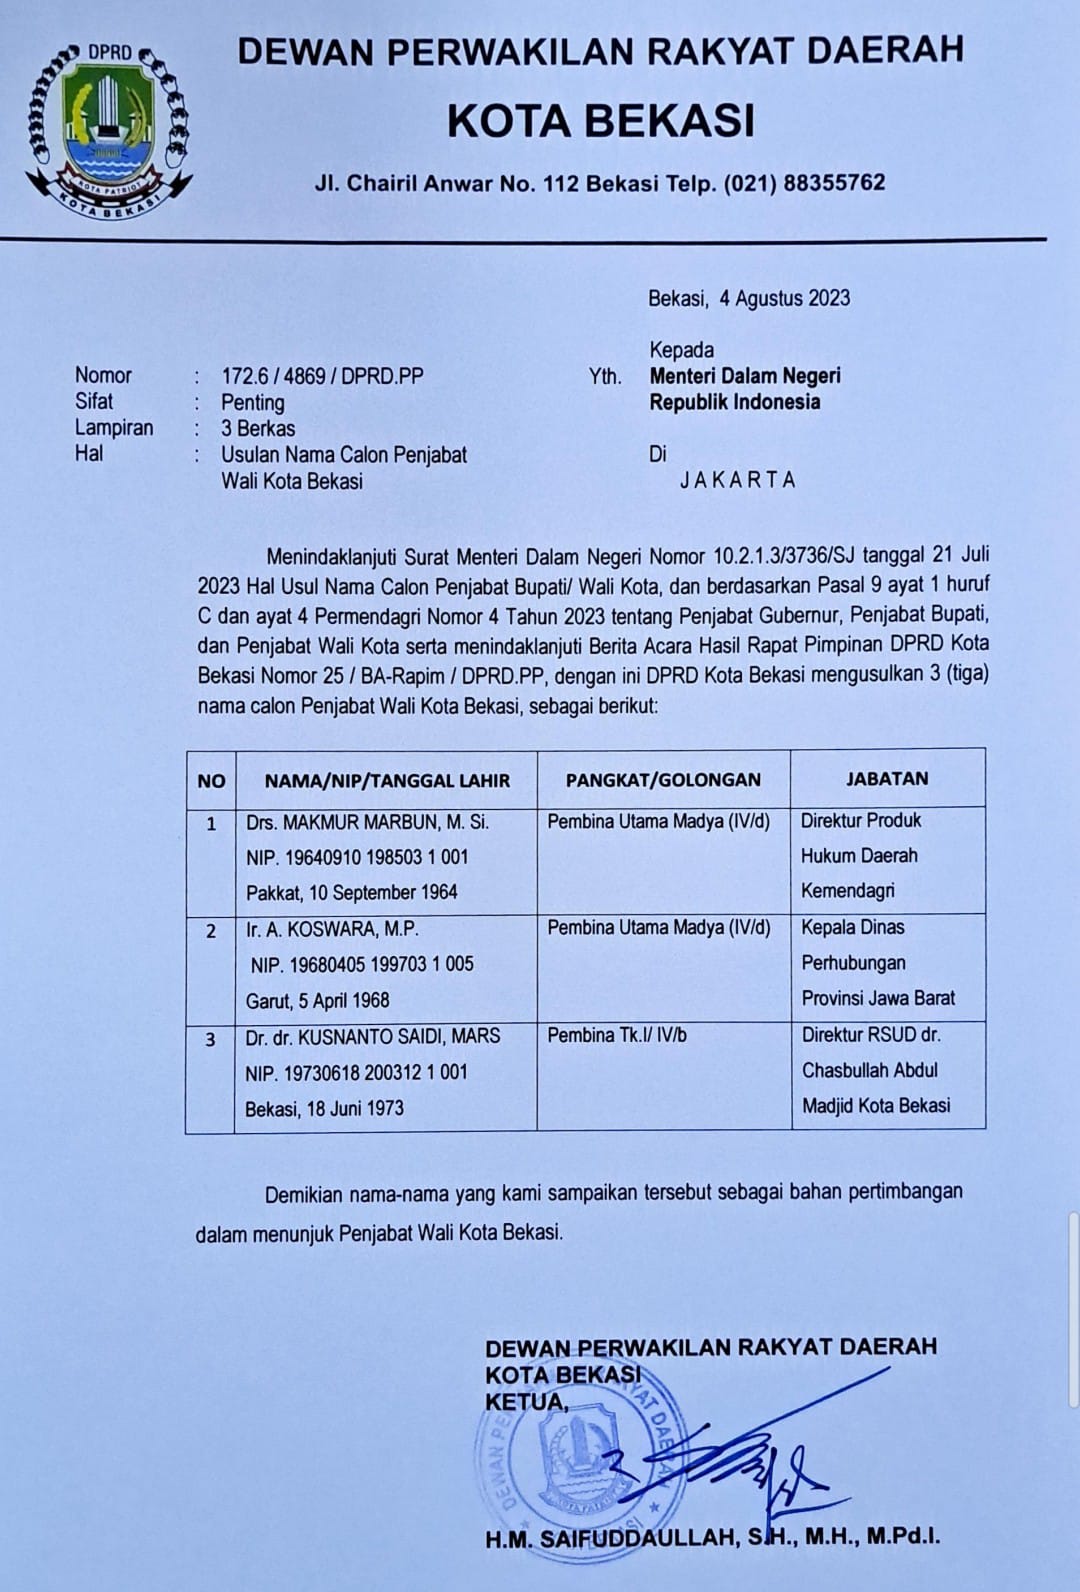 Usulan Nama Calon Pejabat Wali Kota Bekasi